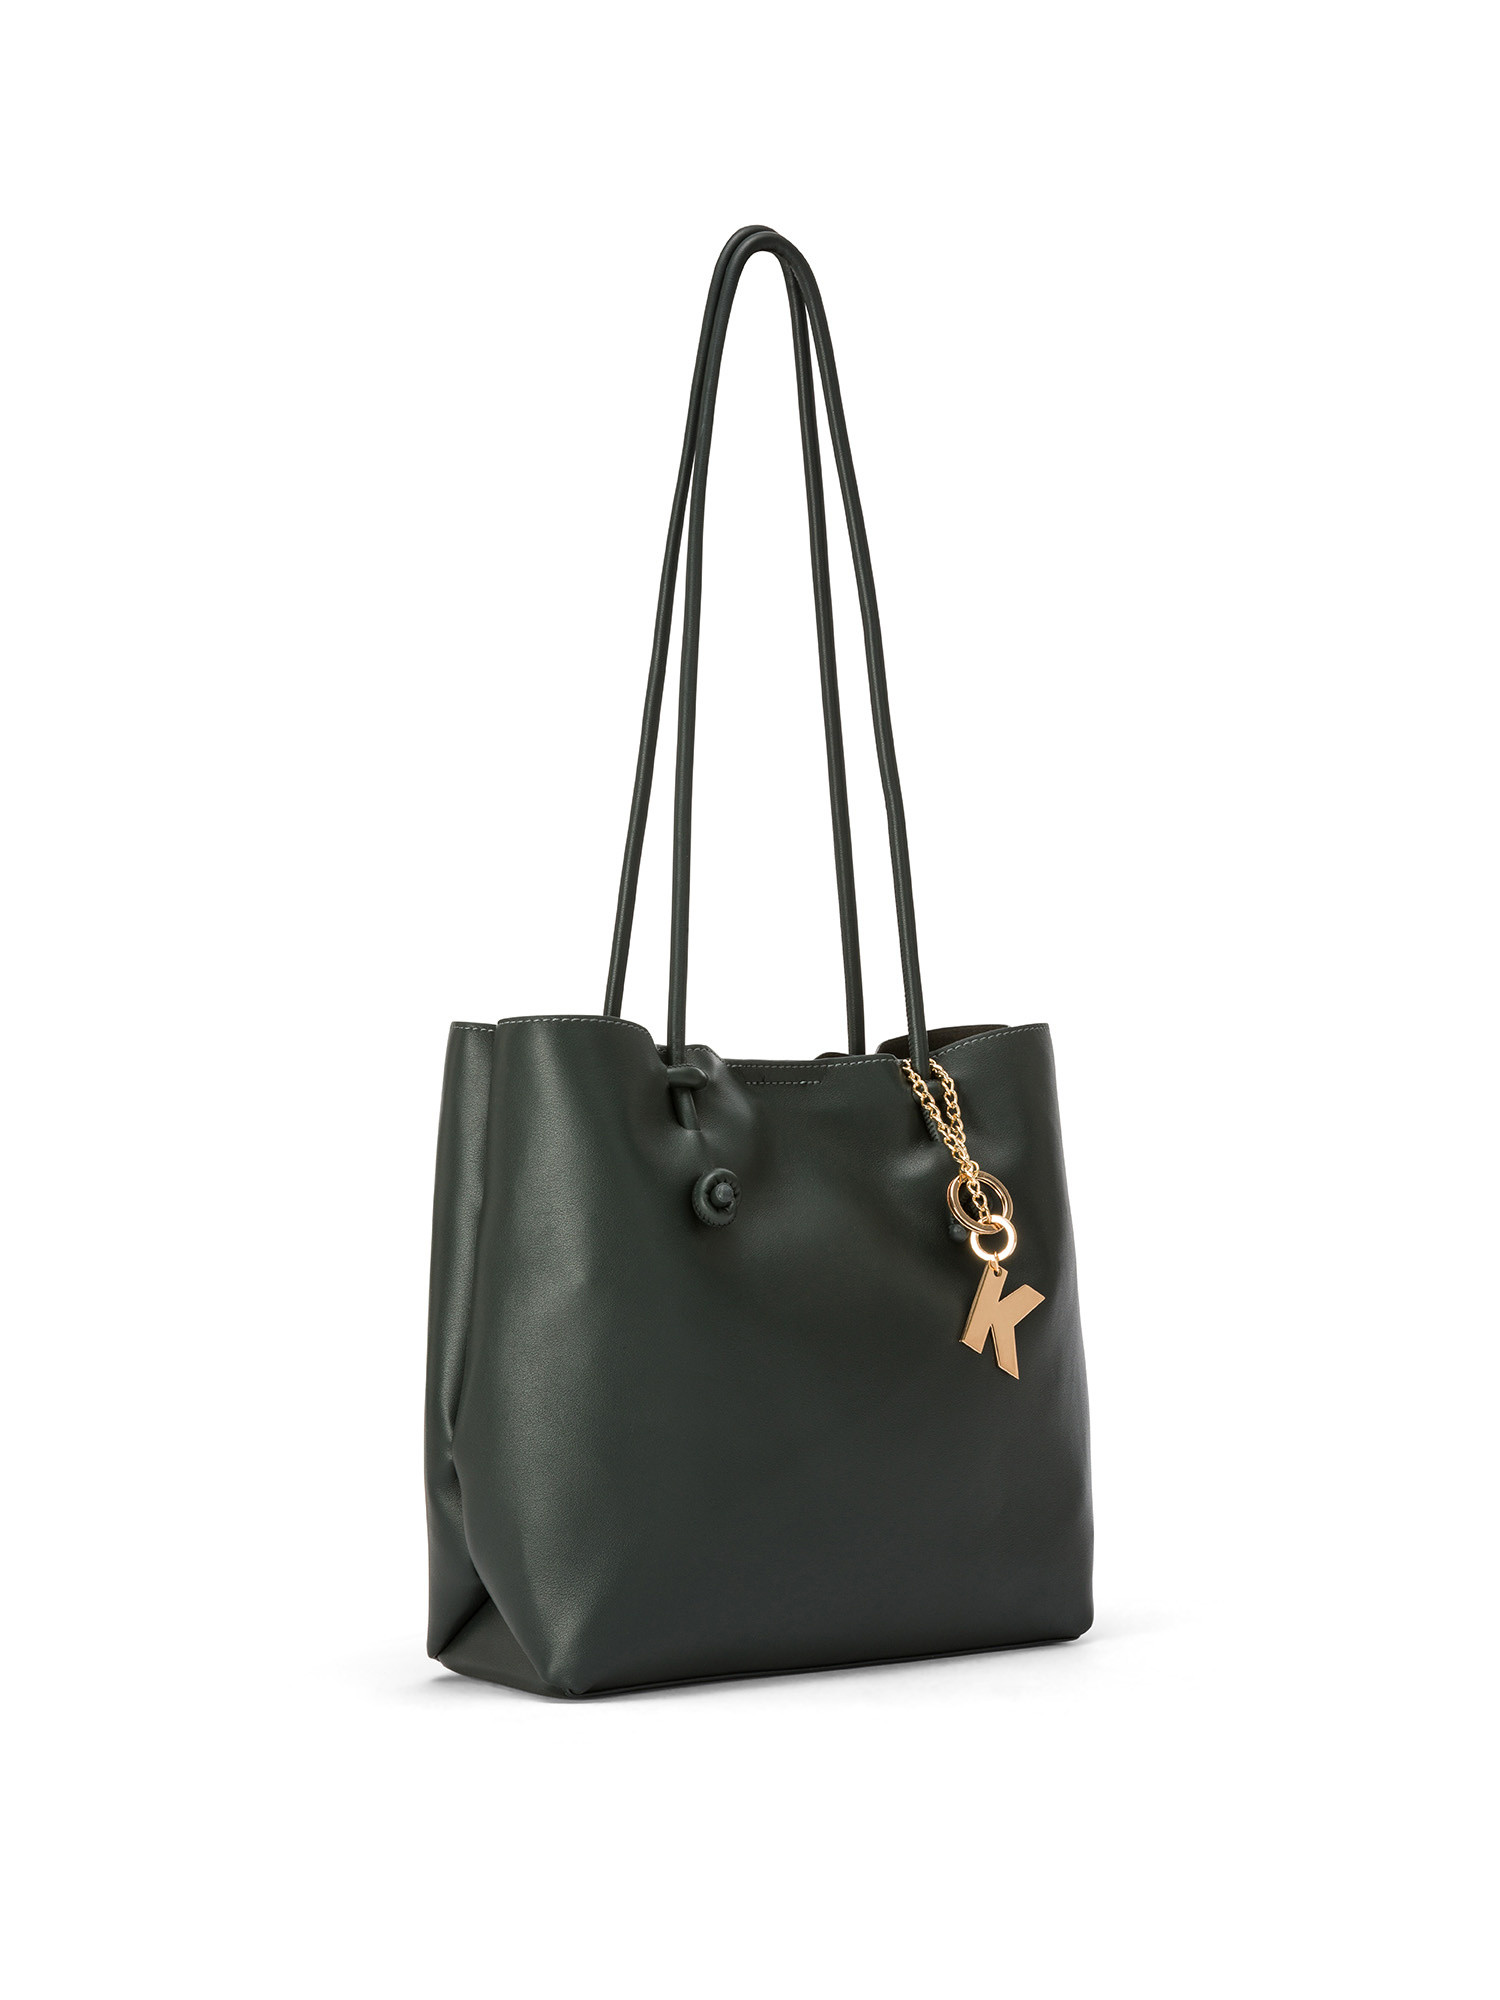 Koan - Shopping bag with knot detail, Dark Blue, large image number 1